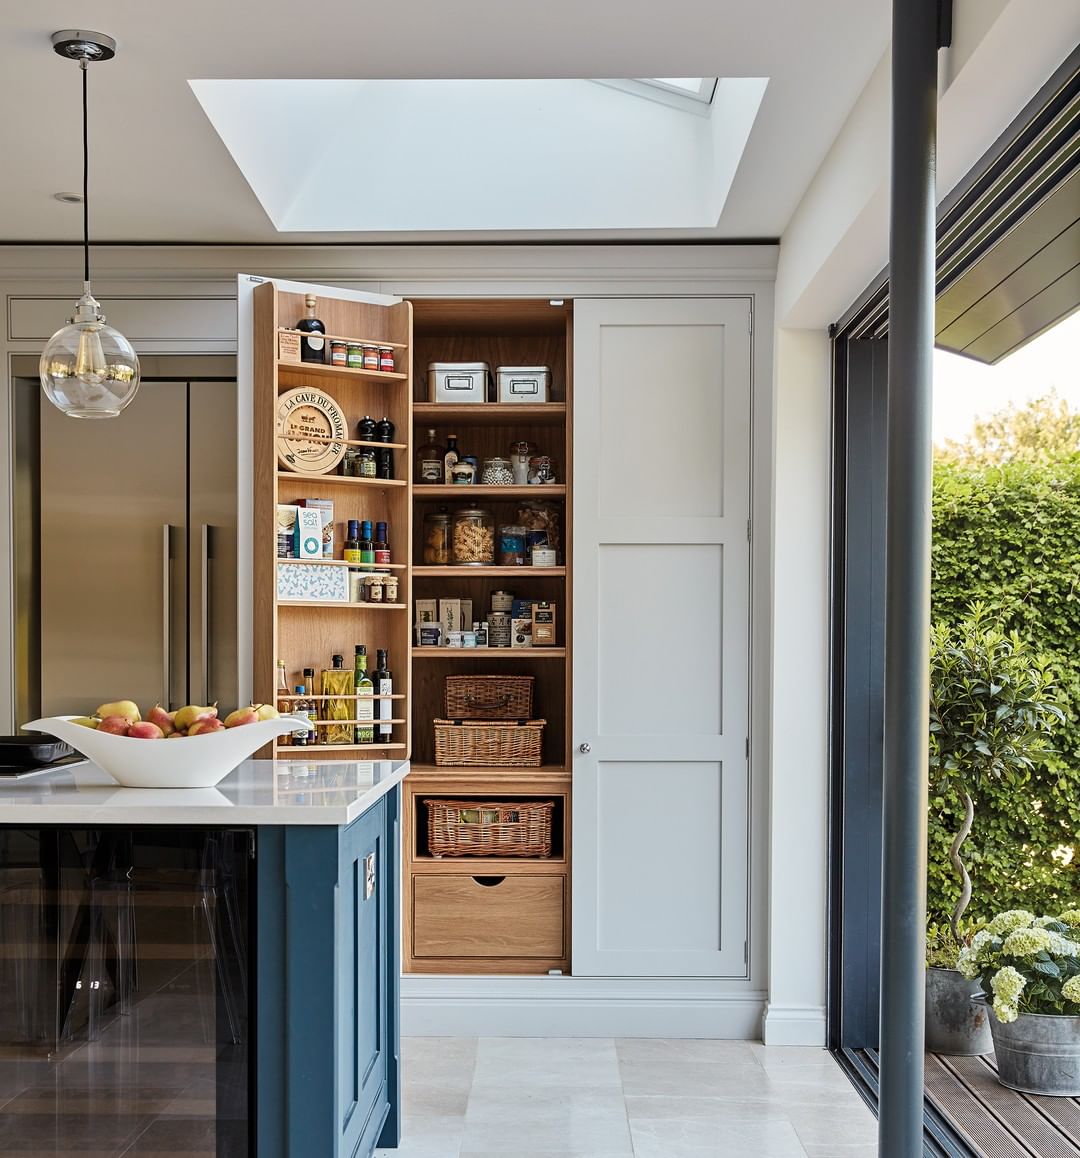 Built-in hidden pantry in kitchen. Photo by Instagram user @tomhowleykitchens